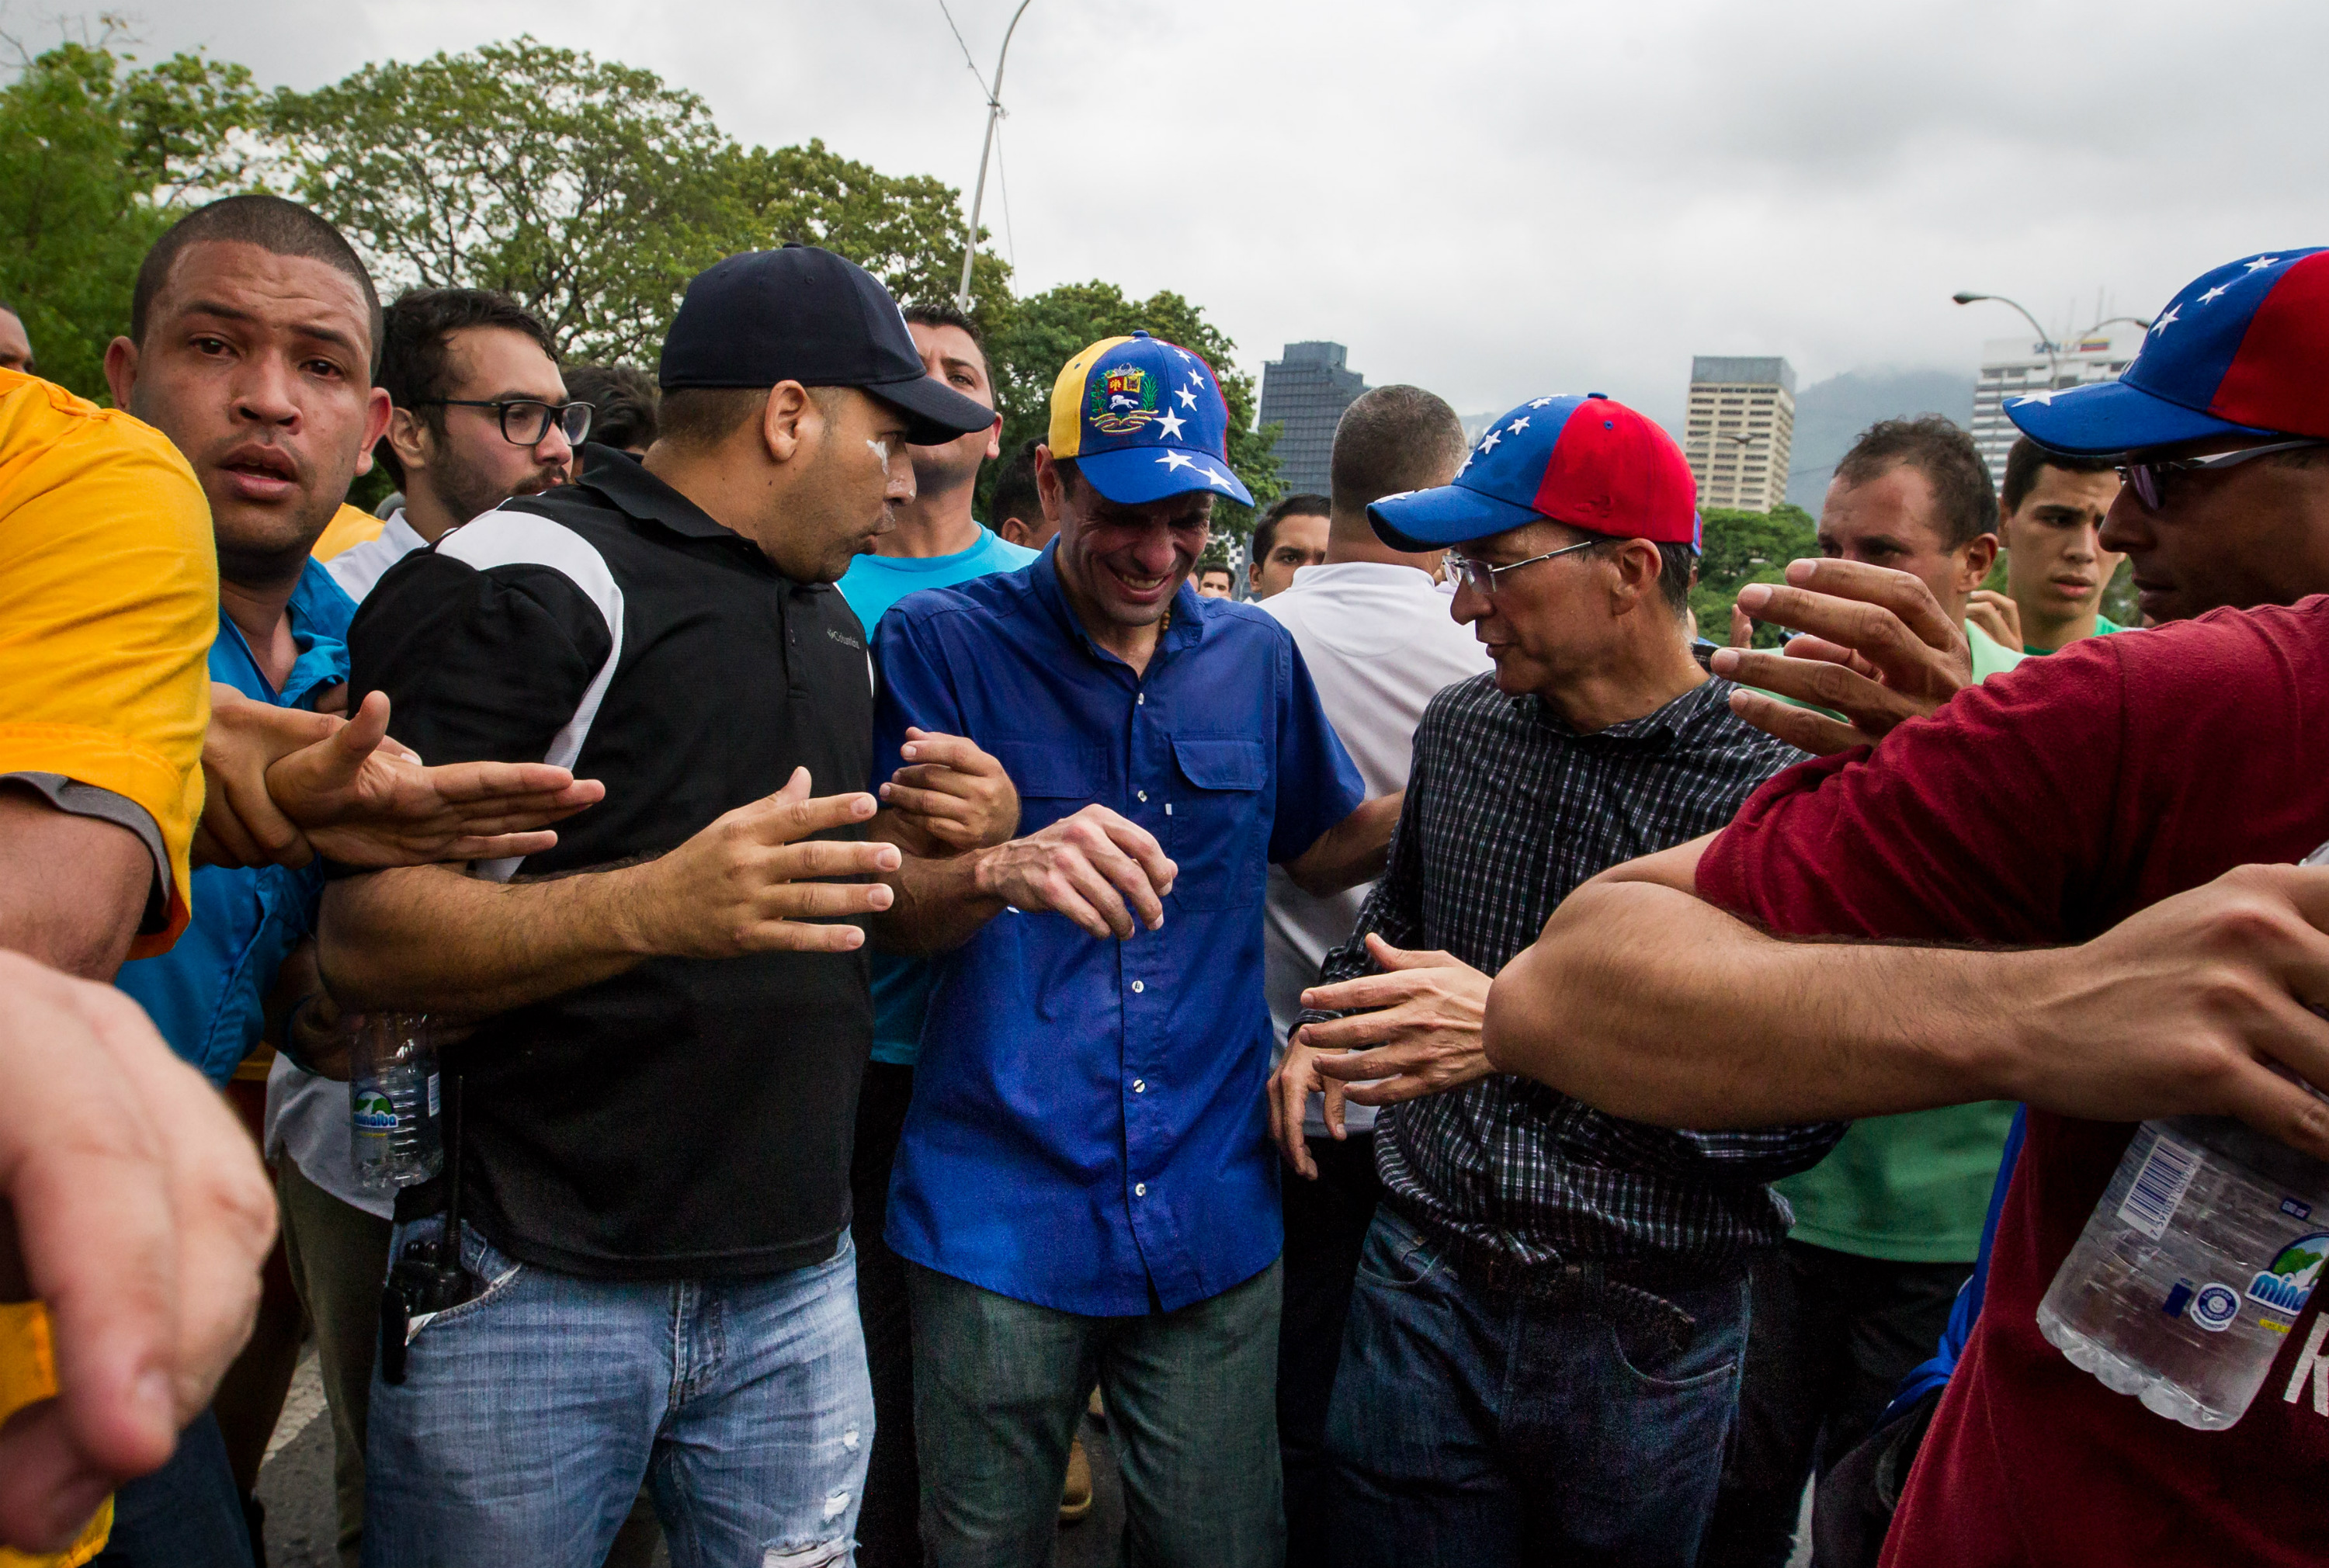 capriles gas lacrimogeno (1)